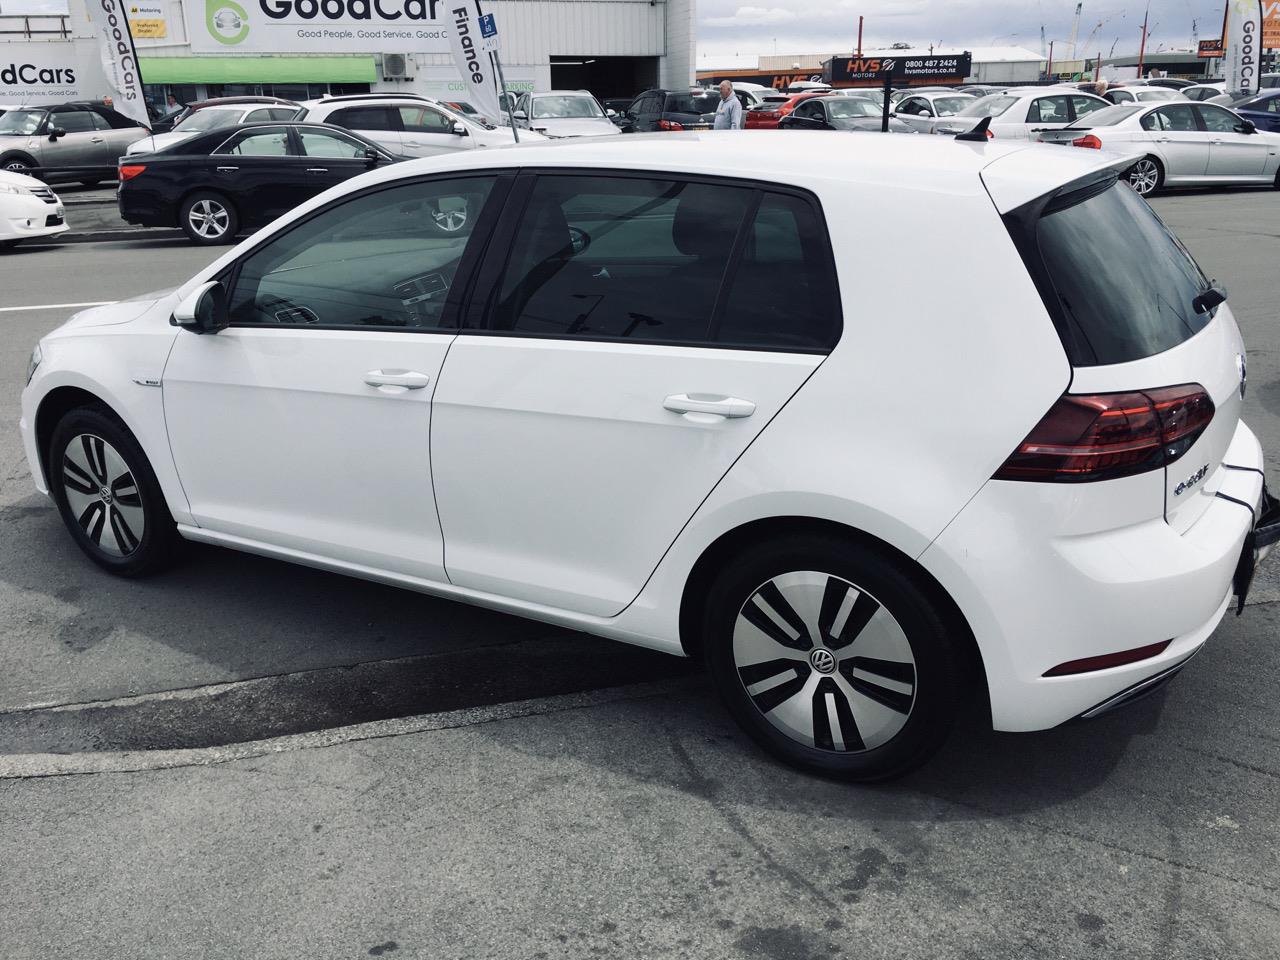 2017 Volkswagen e-Golf